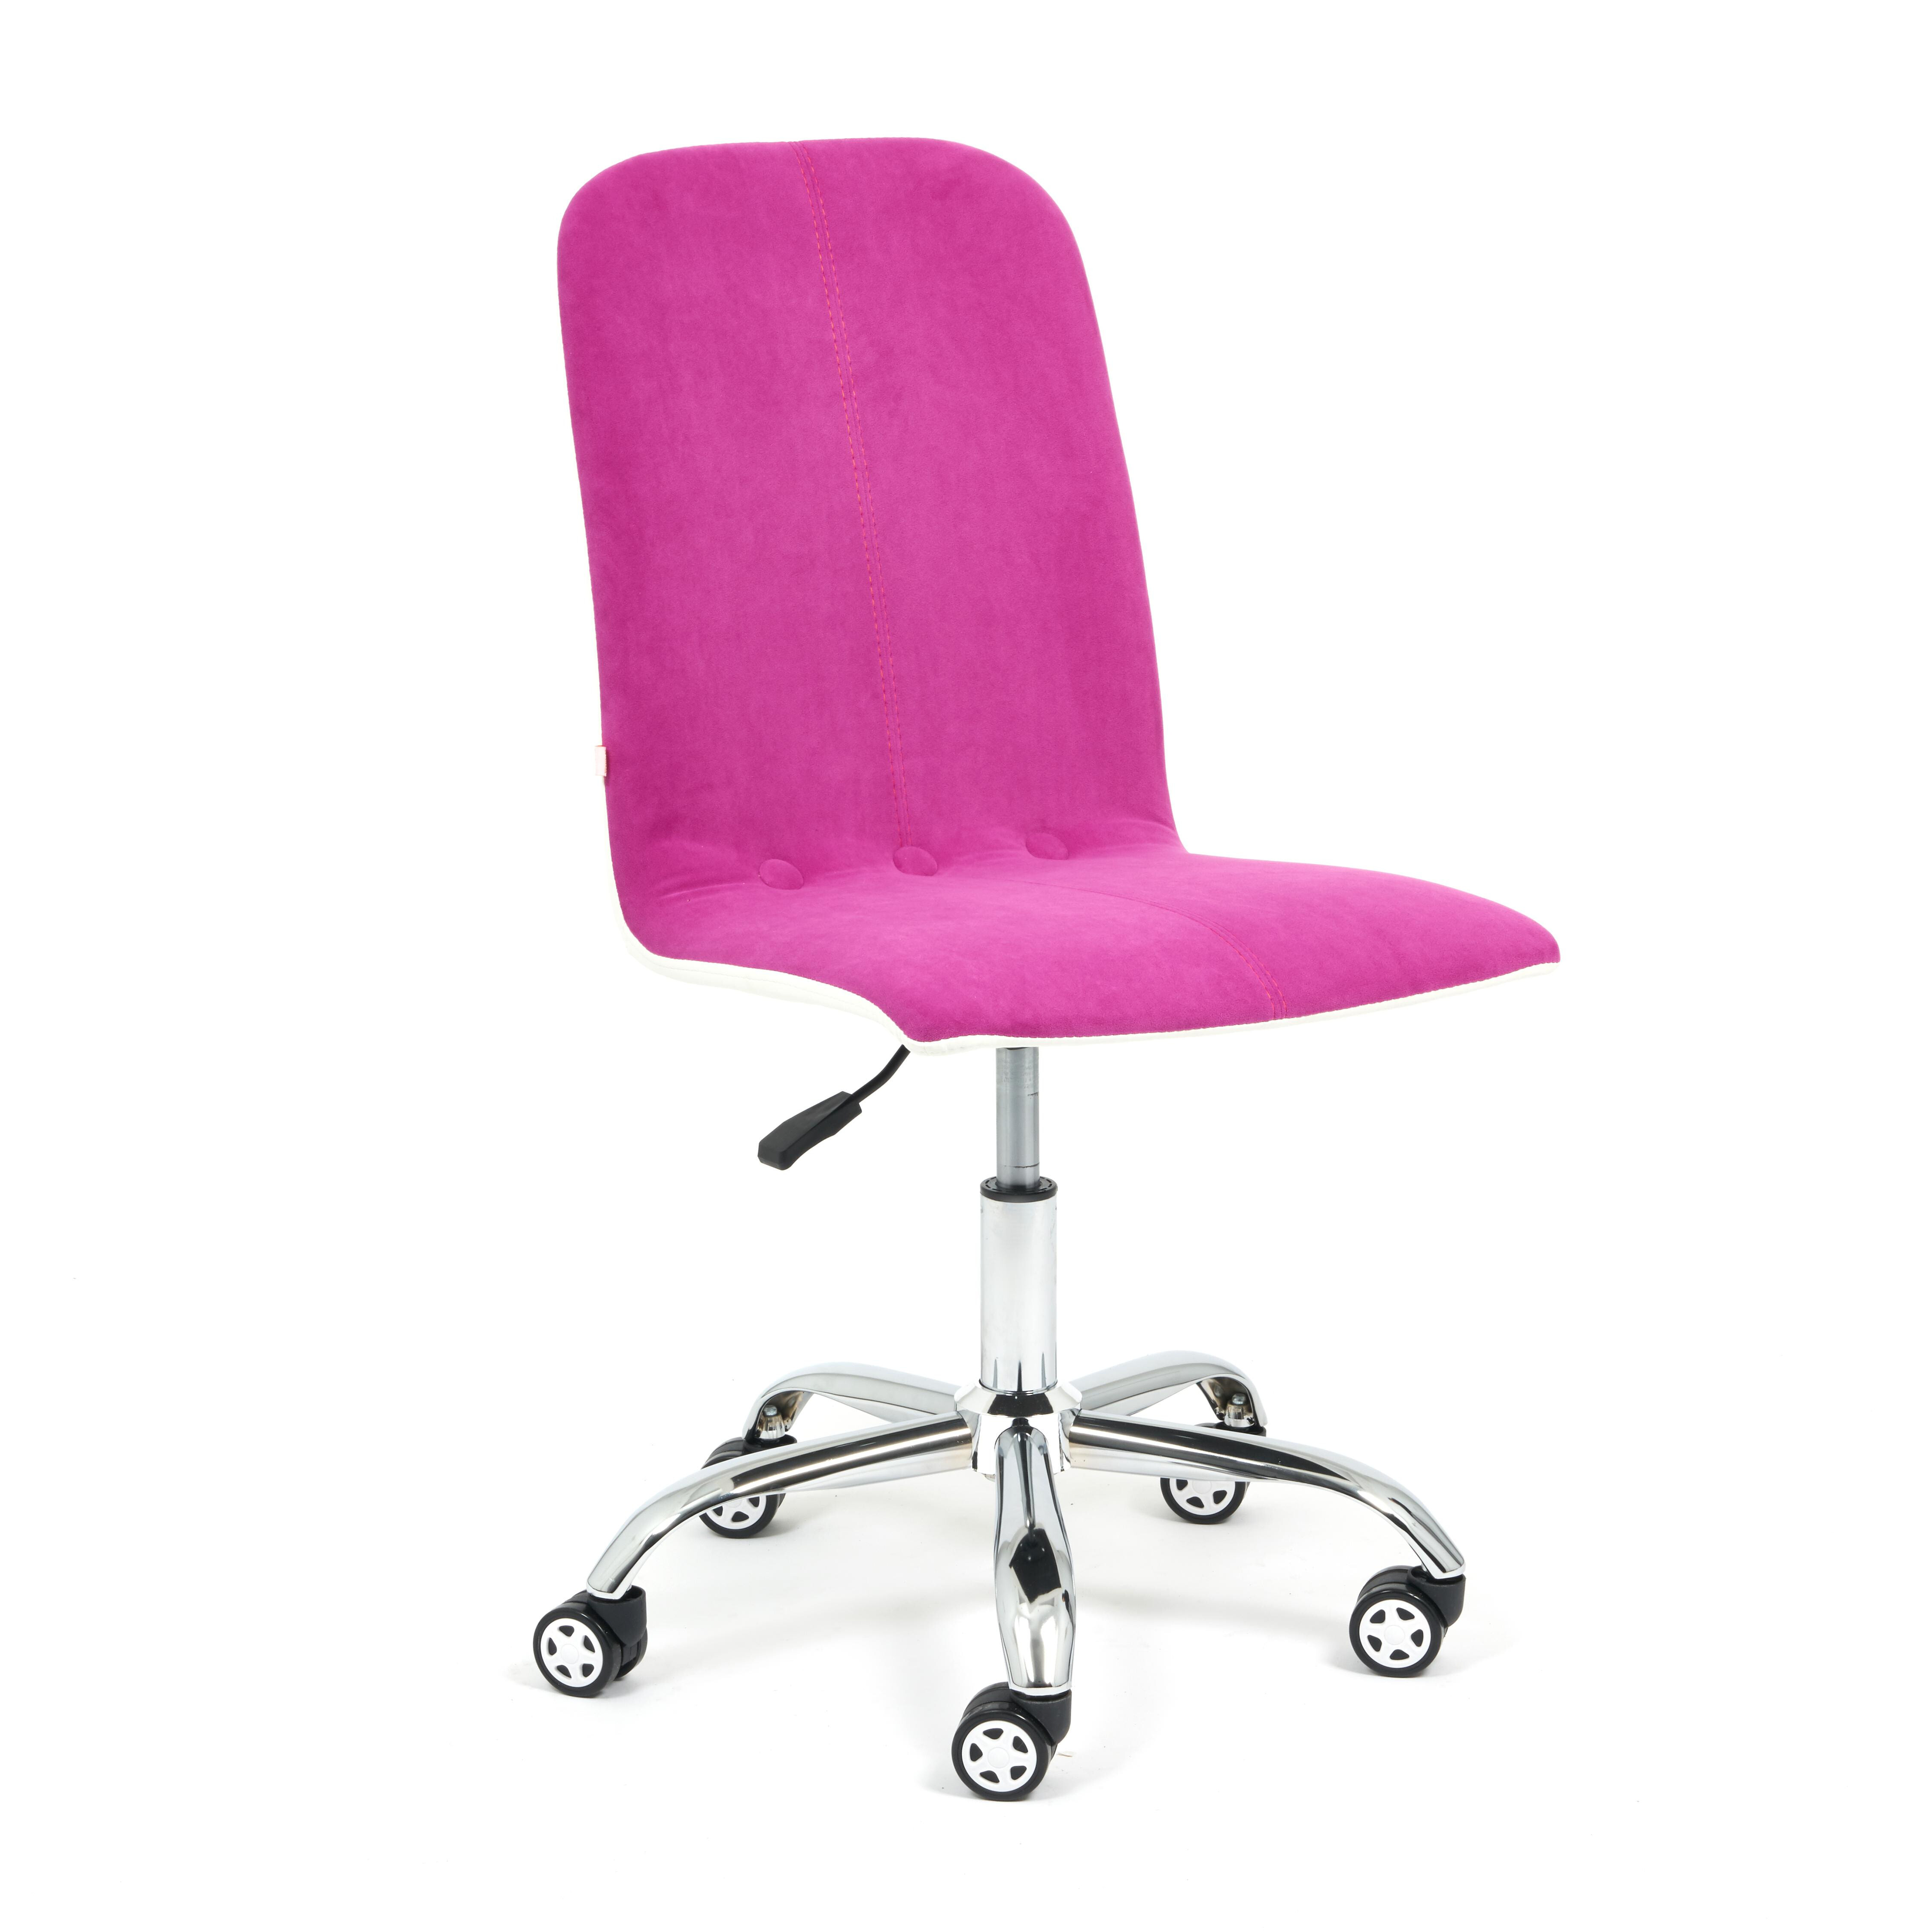 Офисное кресло на колесиках розовое Rio